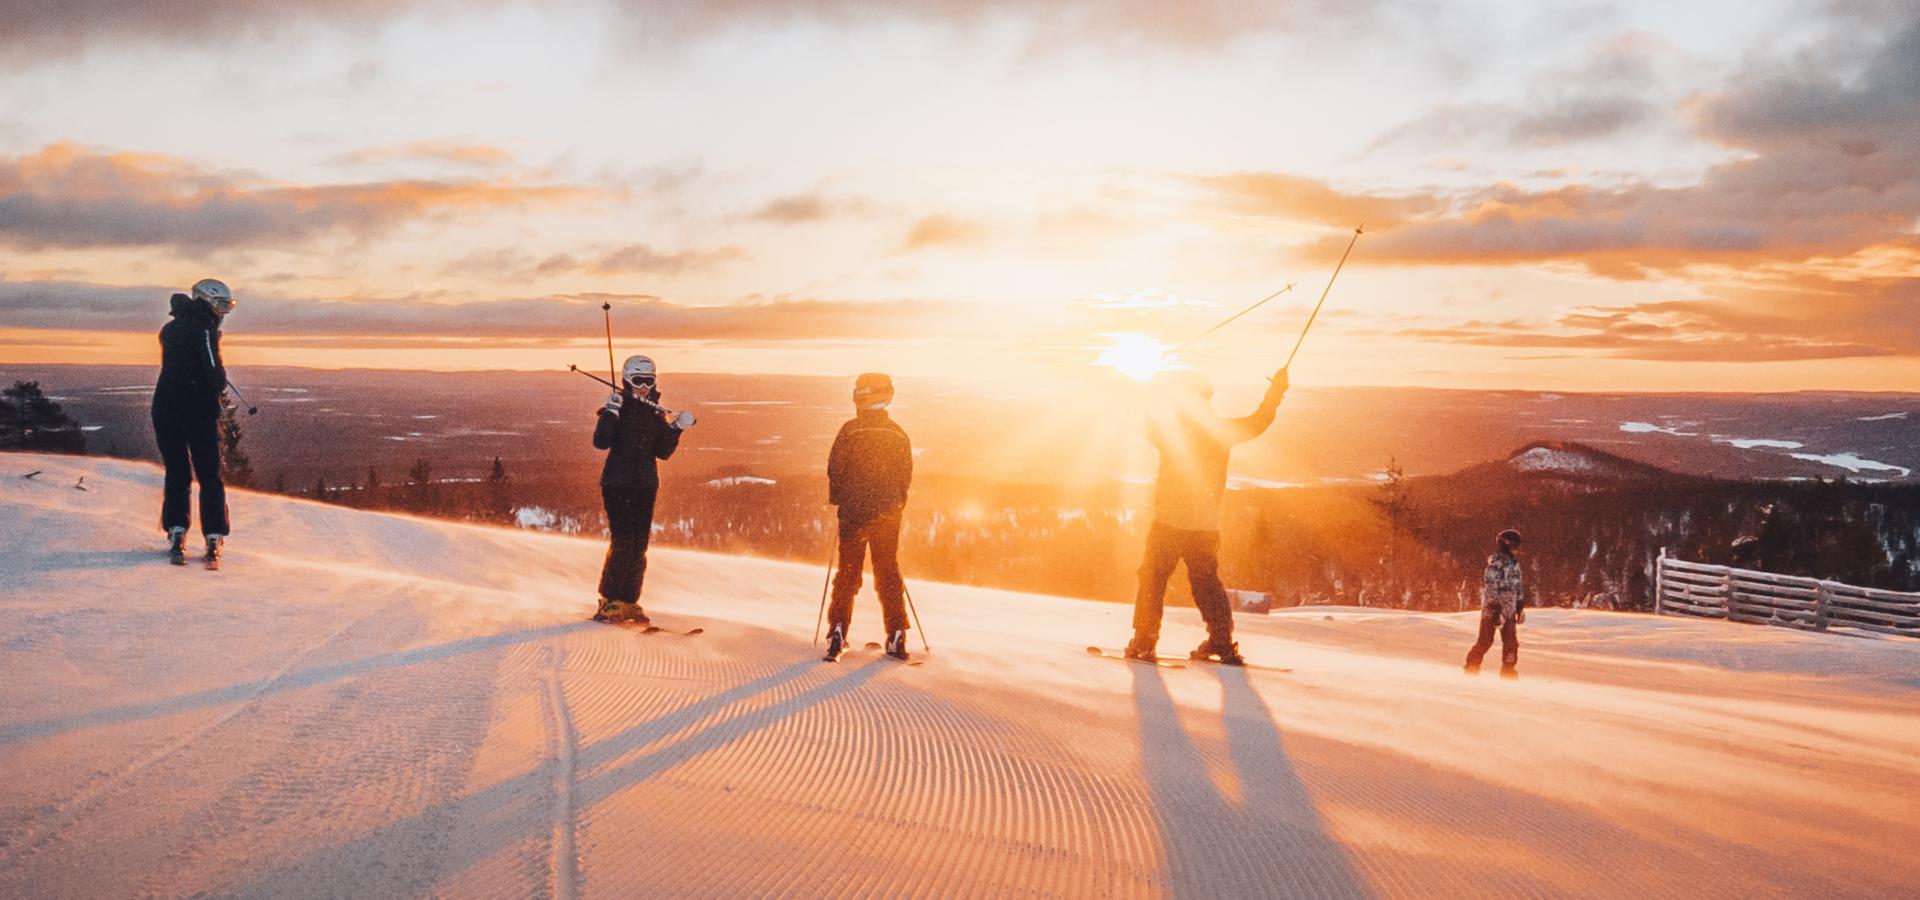 Slalomåkare på toppen av Idre Fjäll i solnedgången.